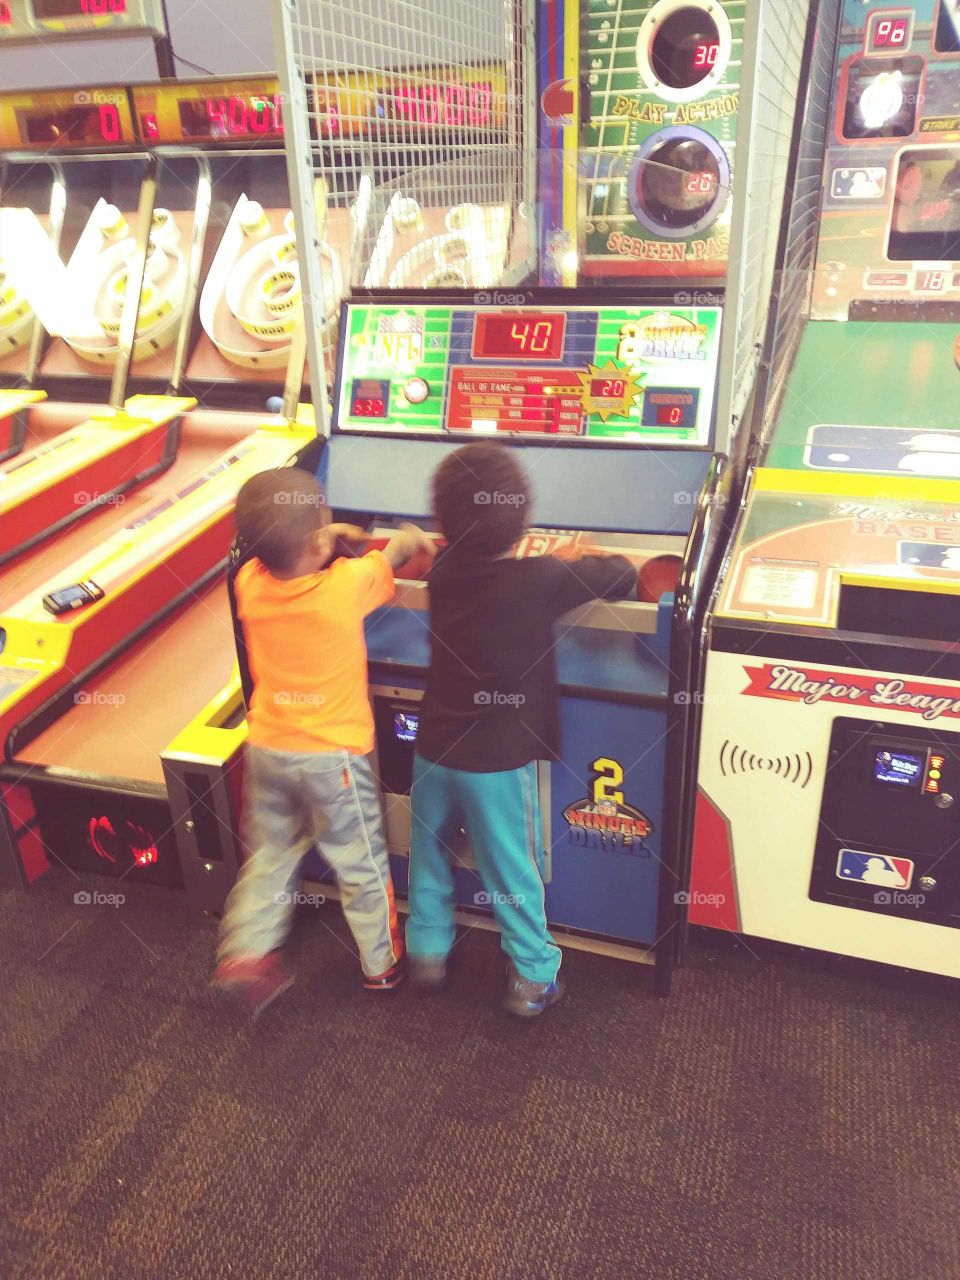 toodler playing arcade games